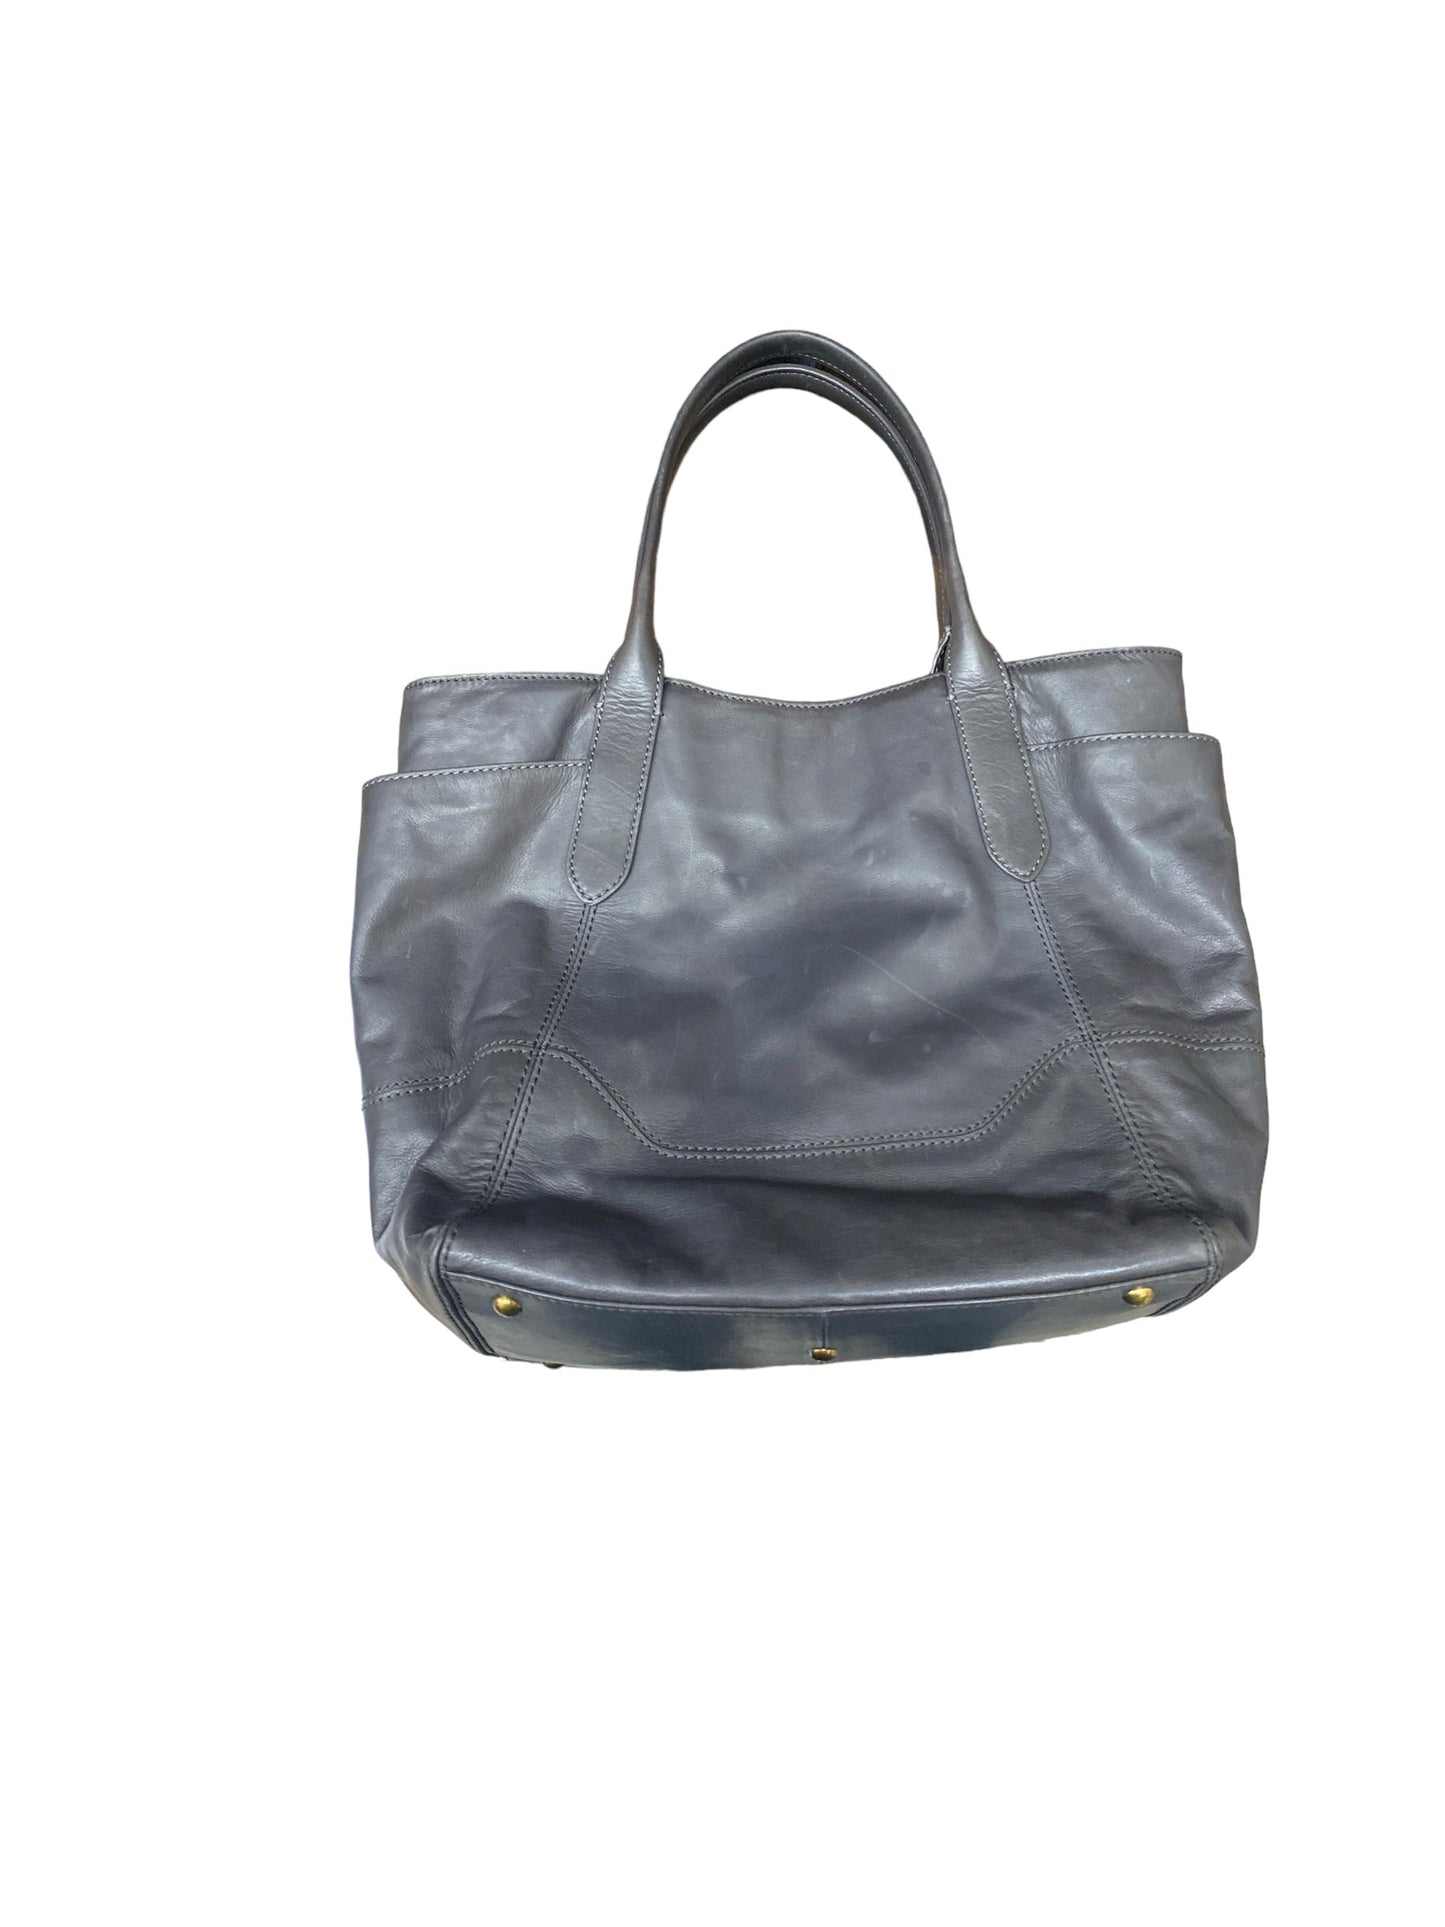 Handbag Leather By Frye  Size: Large